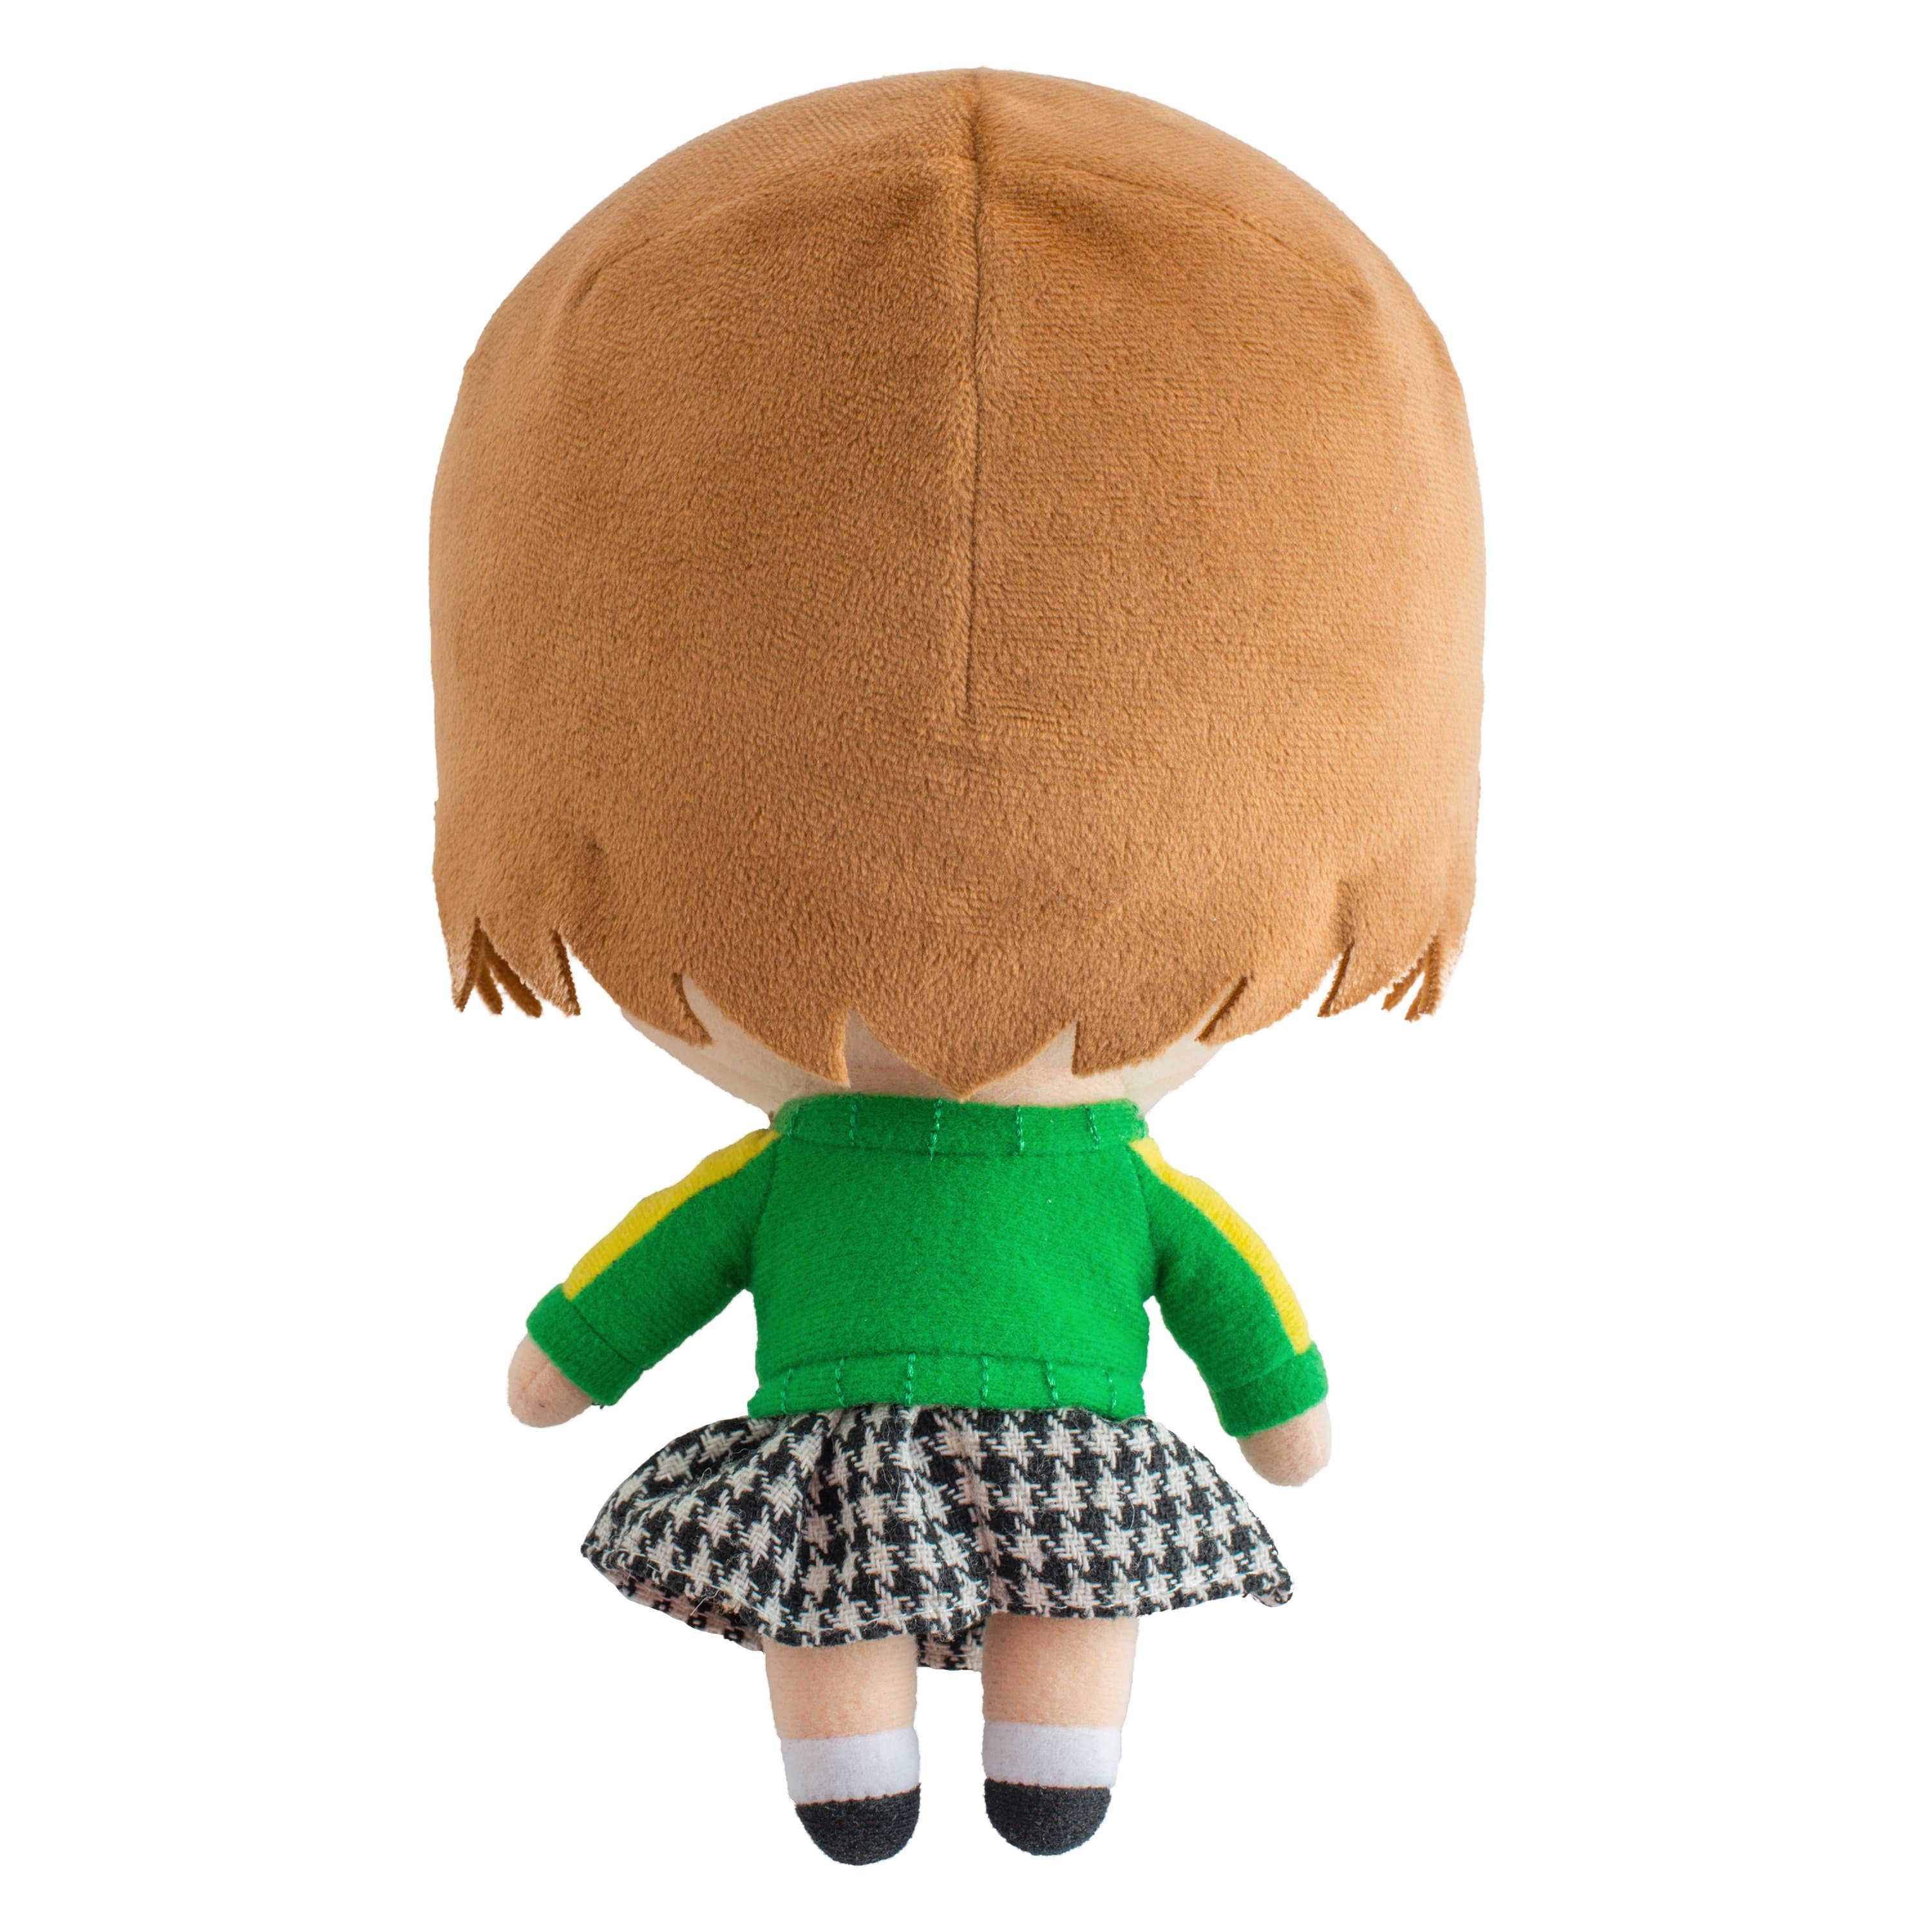 Persona 4 - Chie Satonaka Collector's Plush